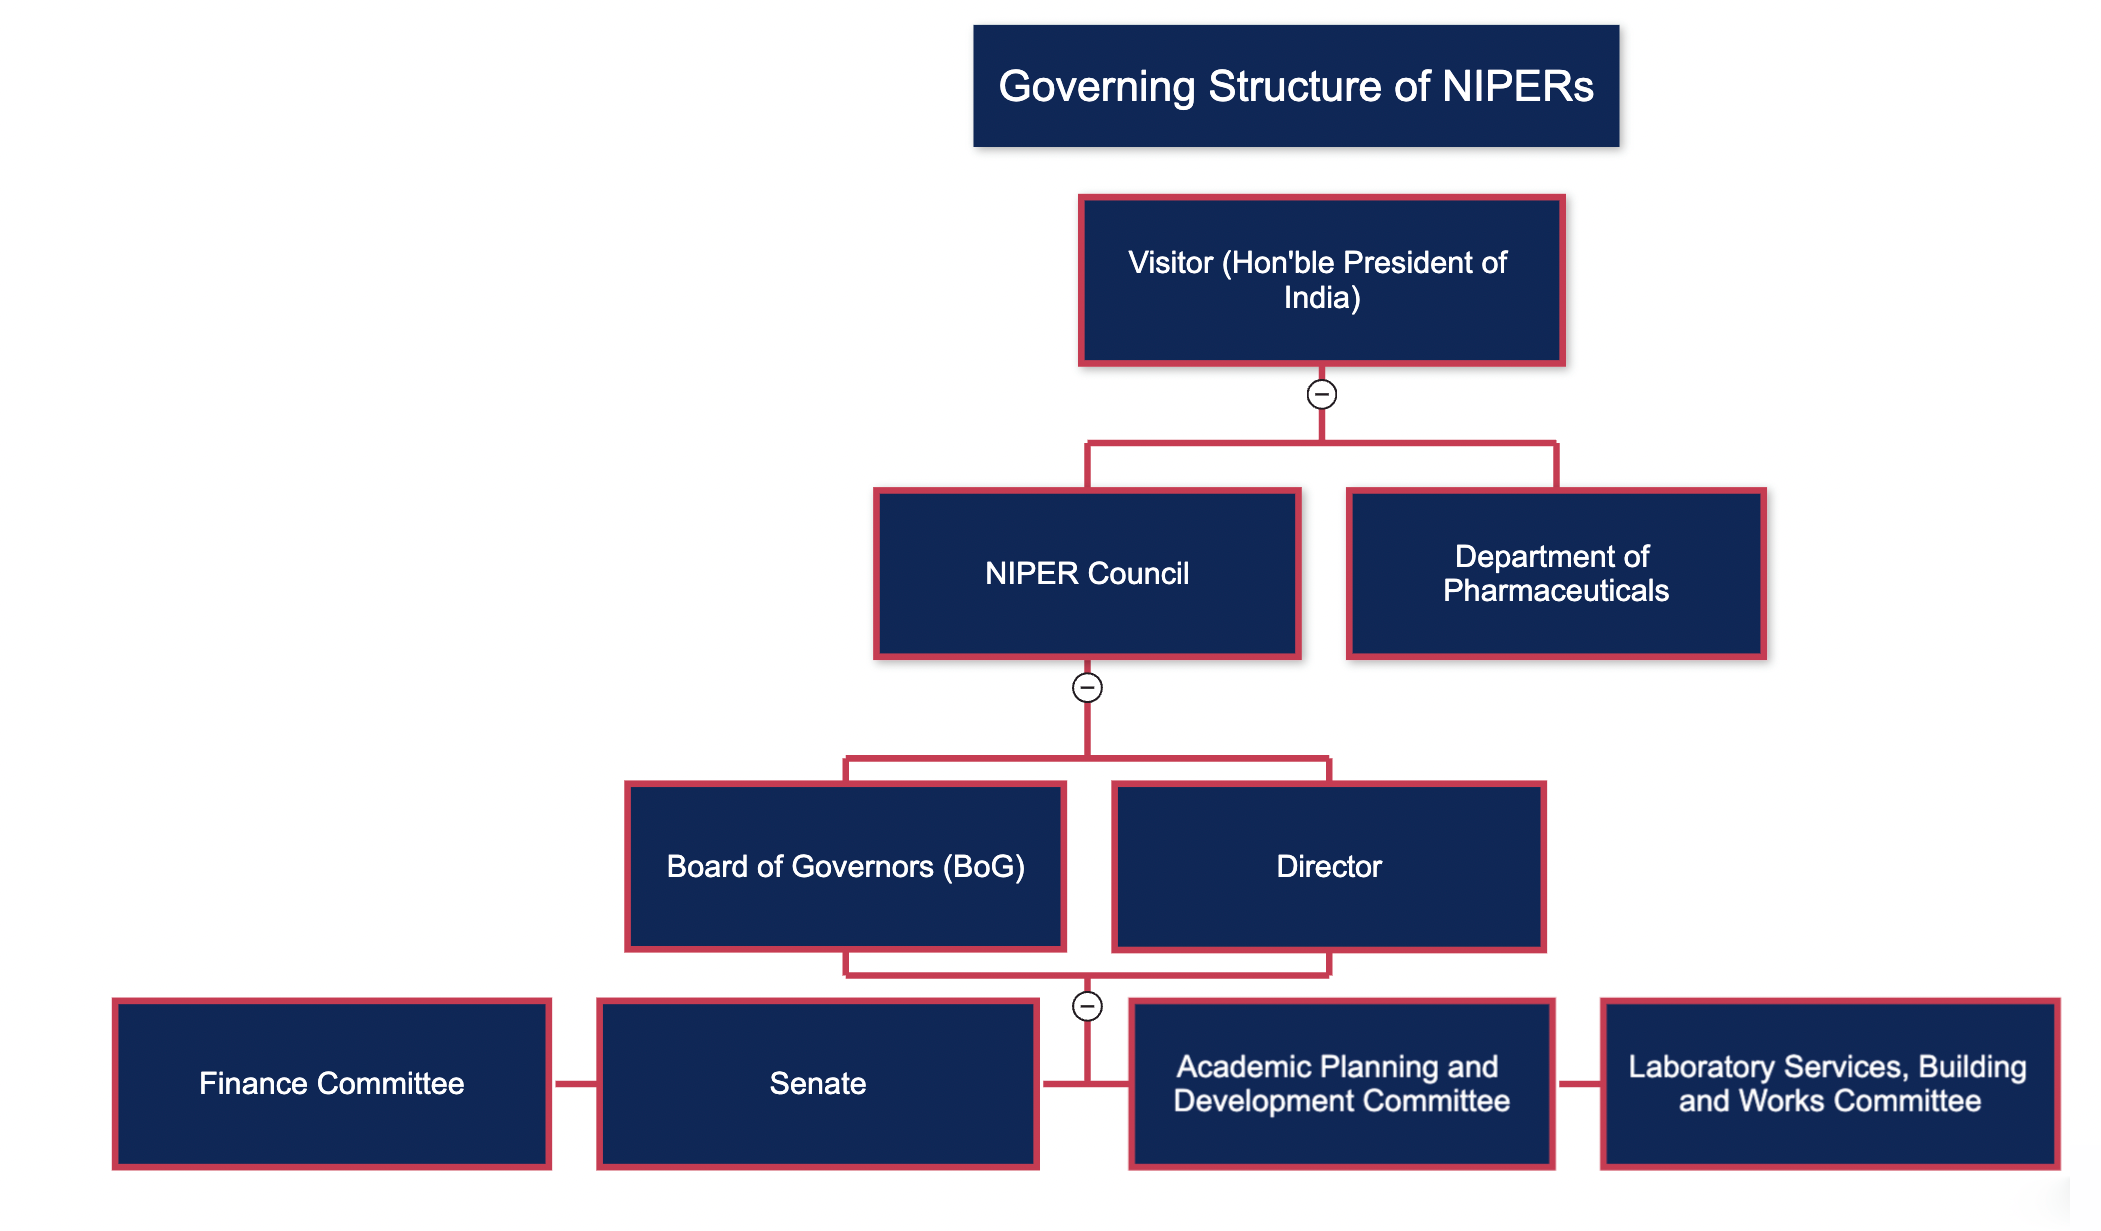 NIPER-Ahmedabad's Organizational Chart